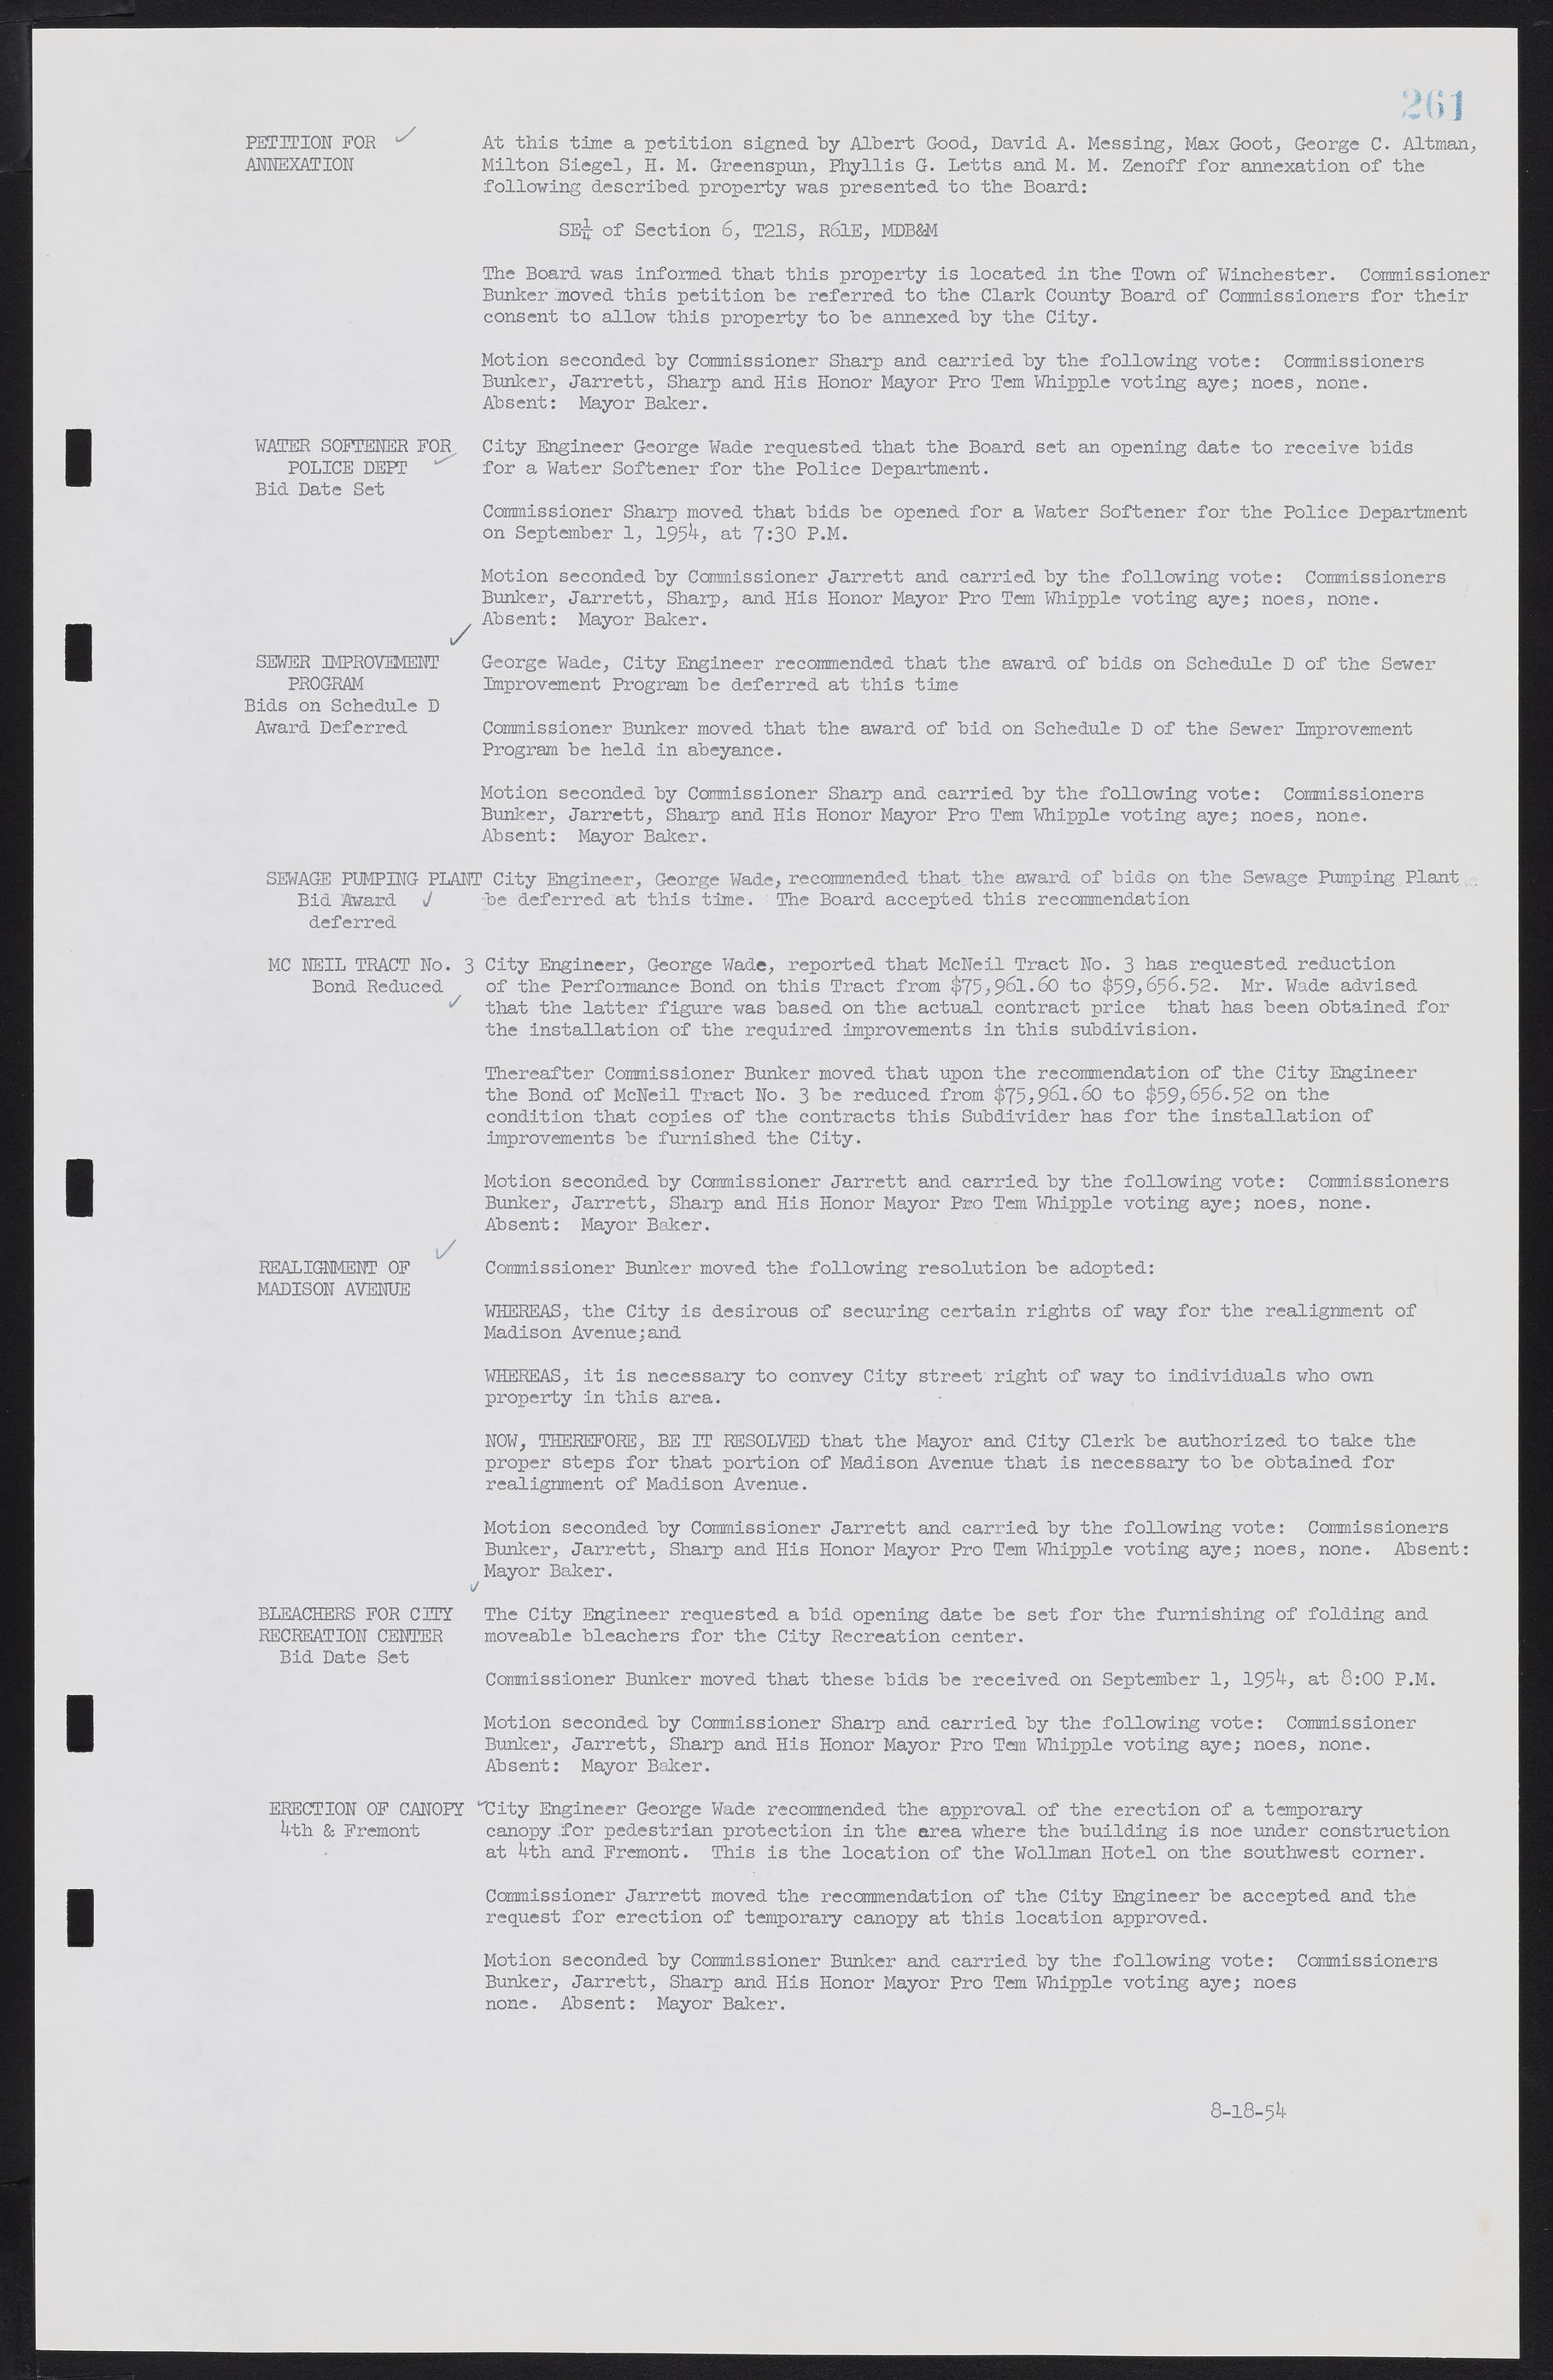 Las Vegas City Commission Minutes, February 17, 1954 to September 21, 1955, lvc000009-267